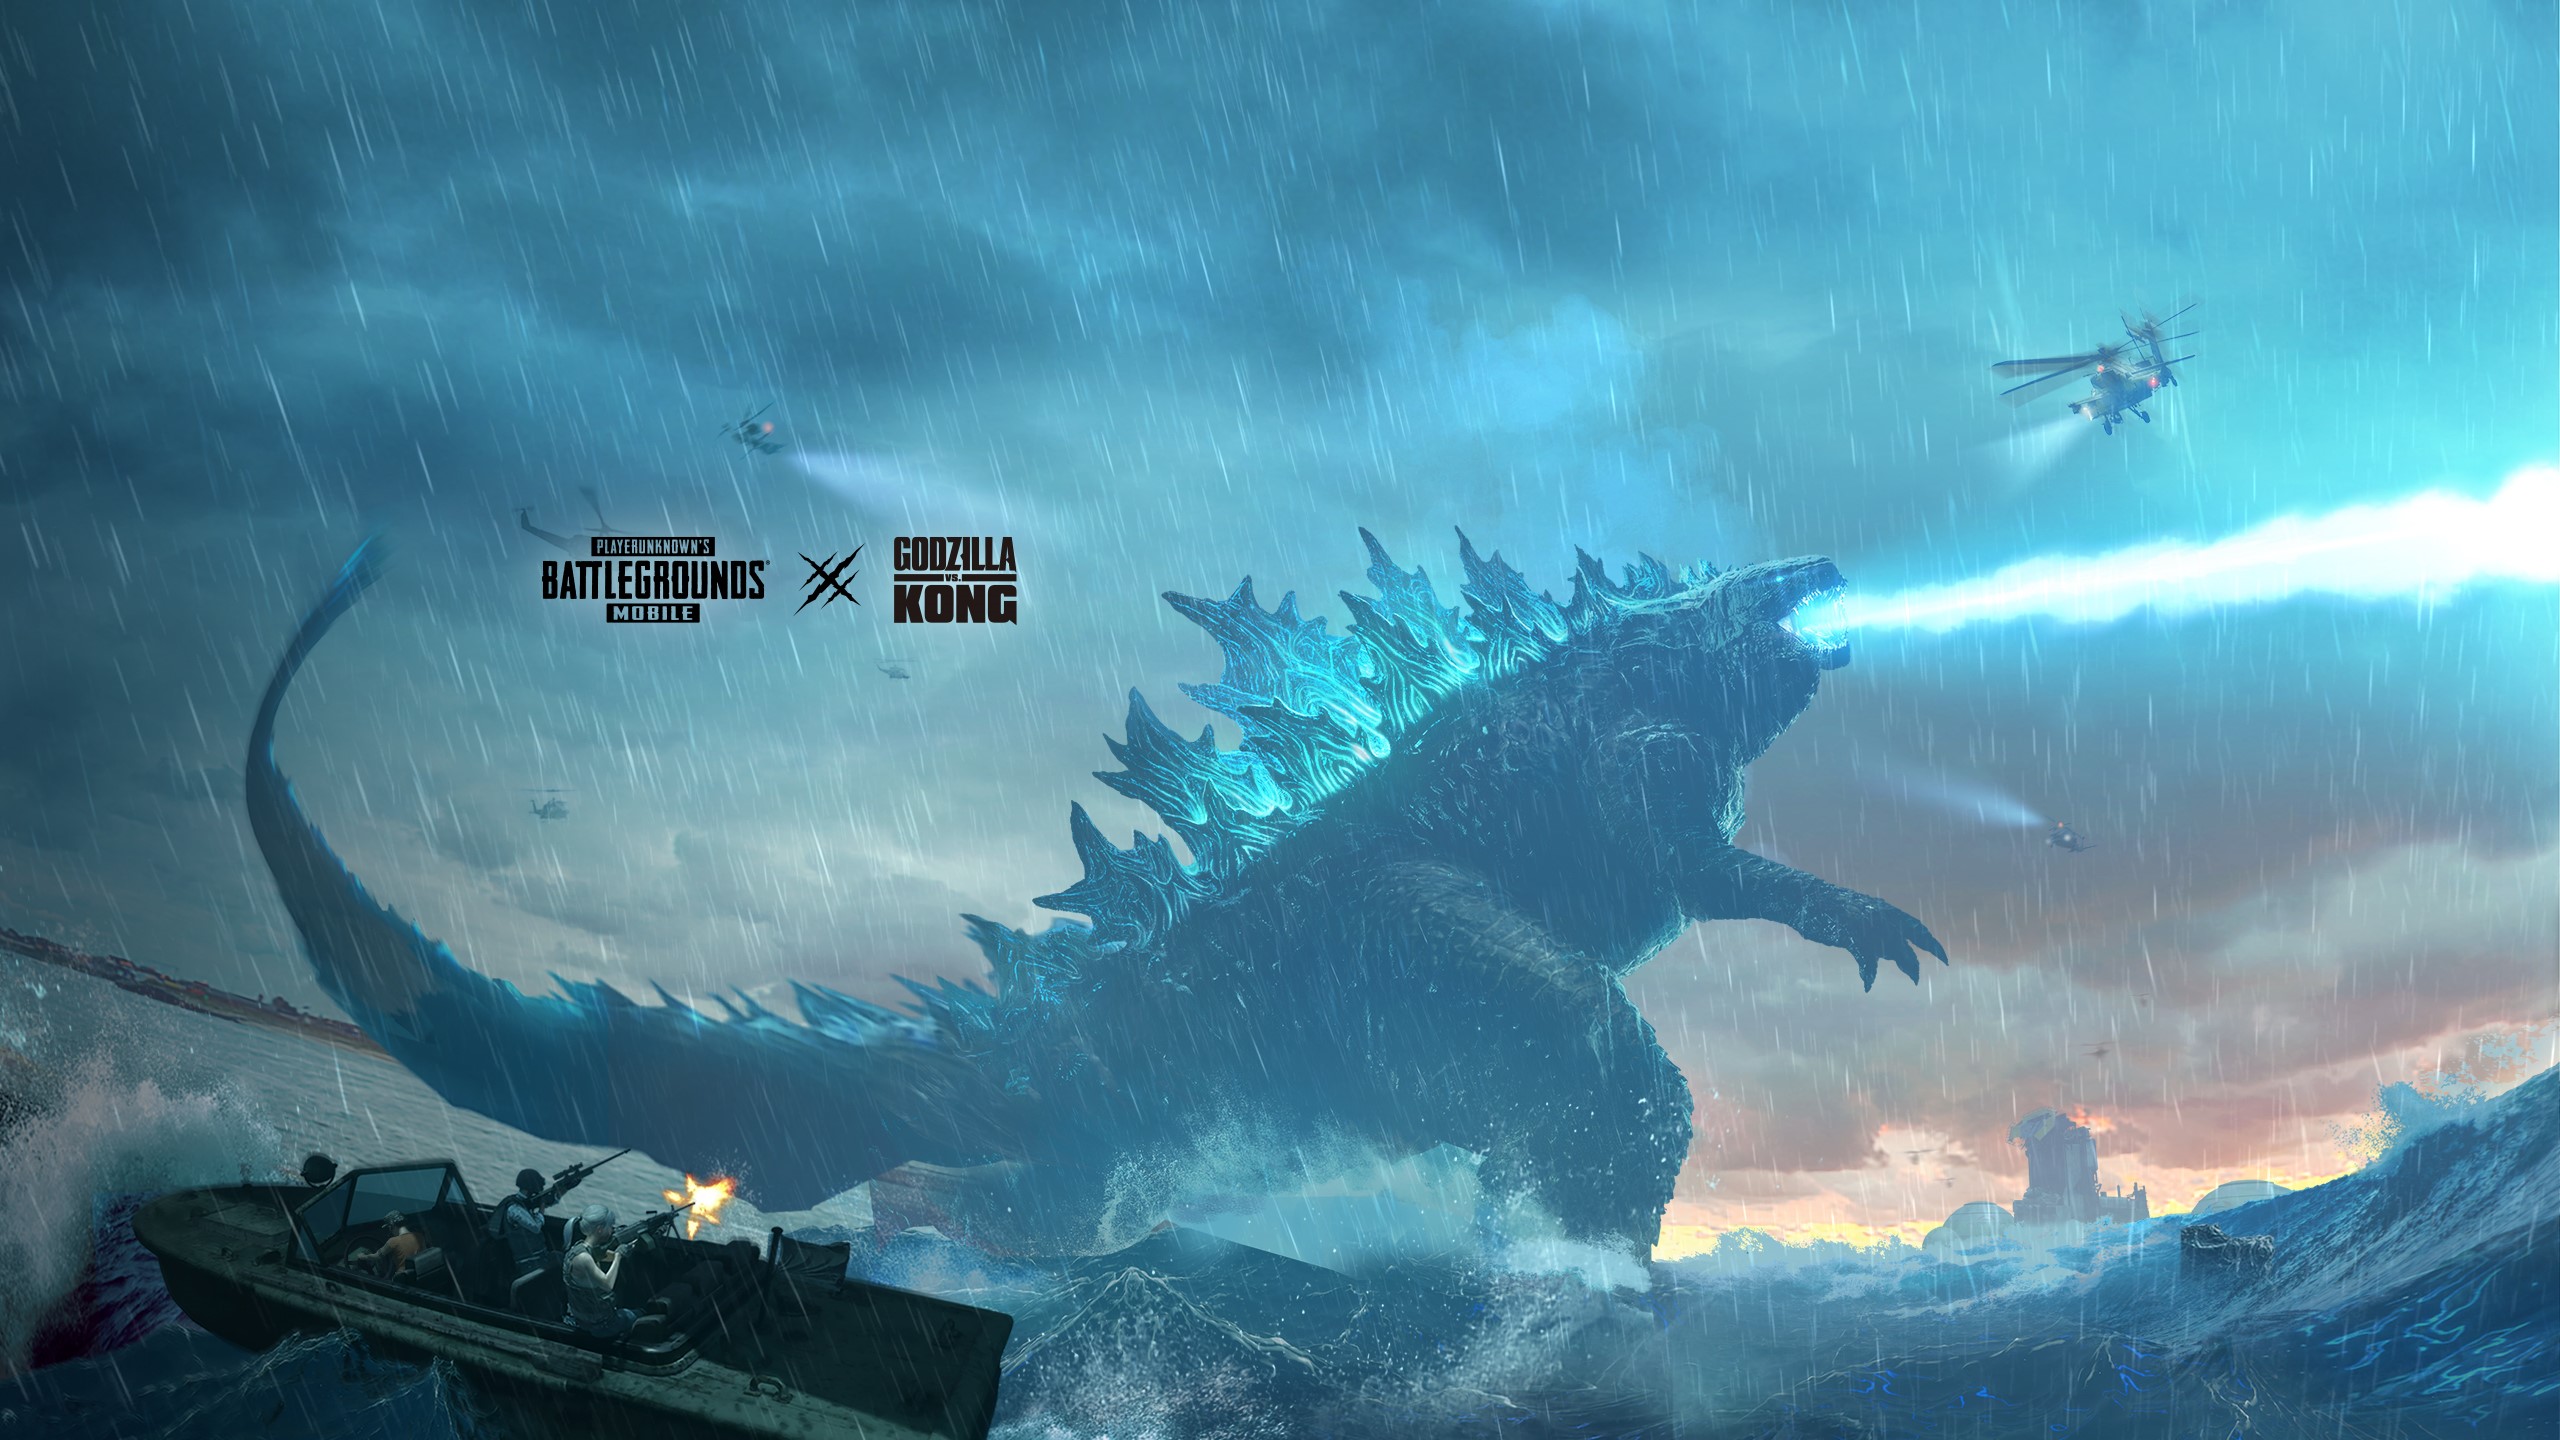 Godzilla vs Kong 4k Ultra HD Wallpaper by Marcus Whinney